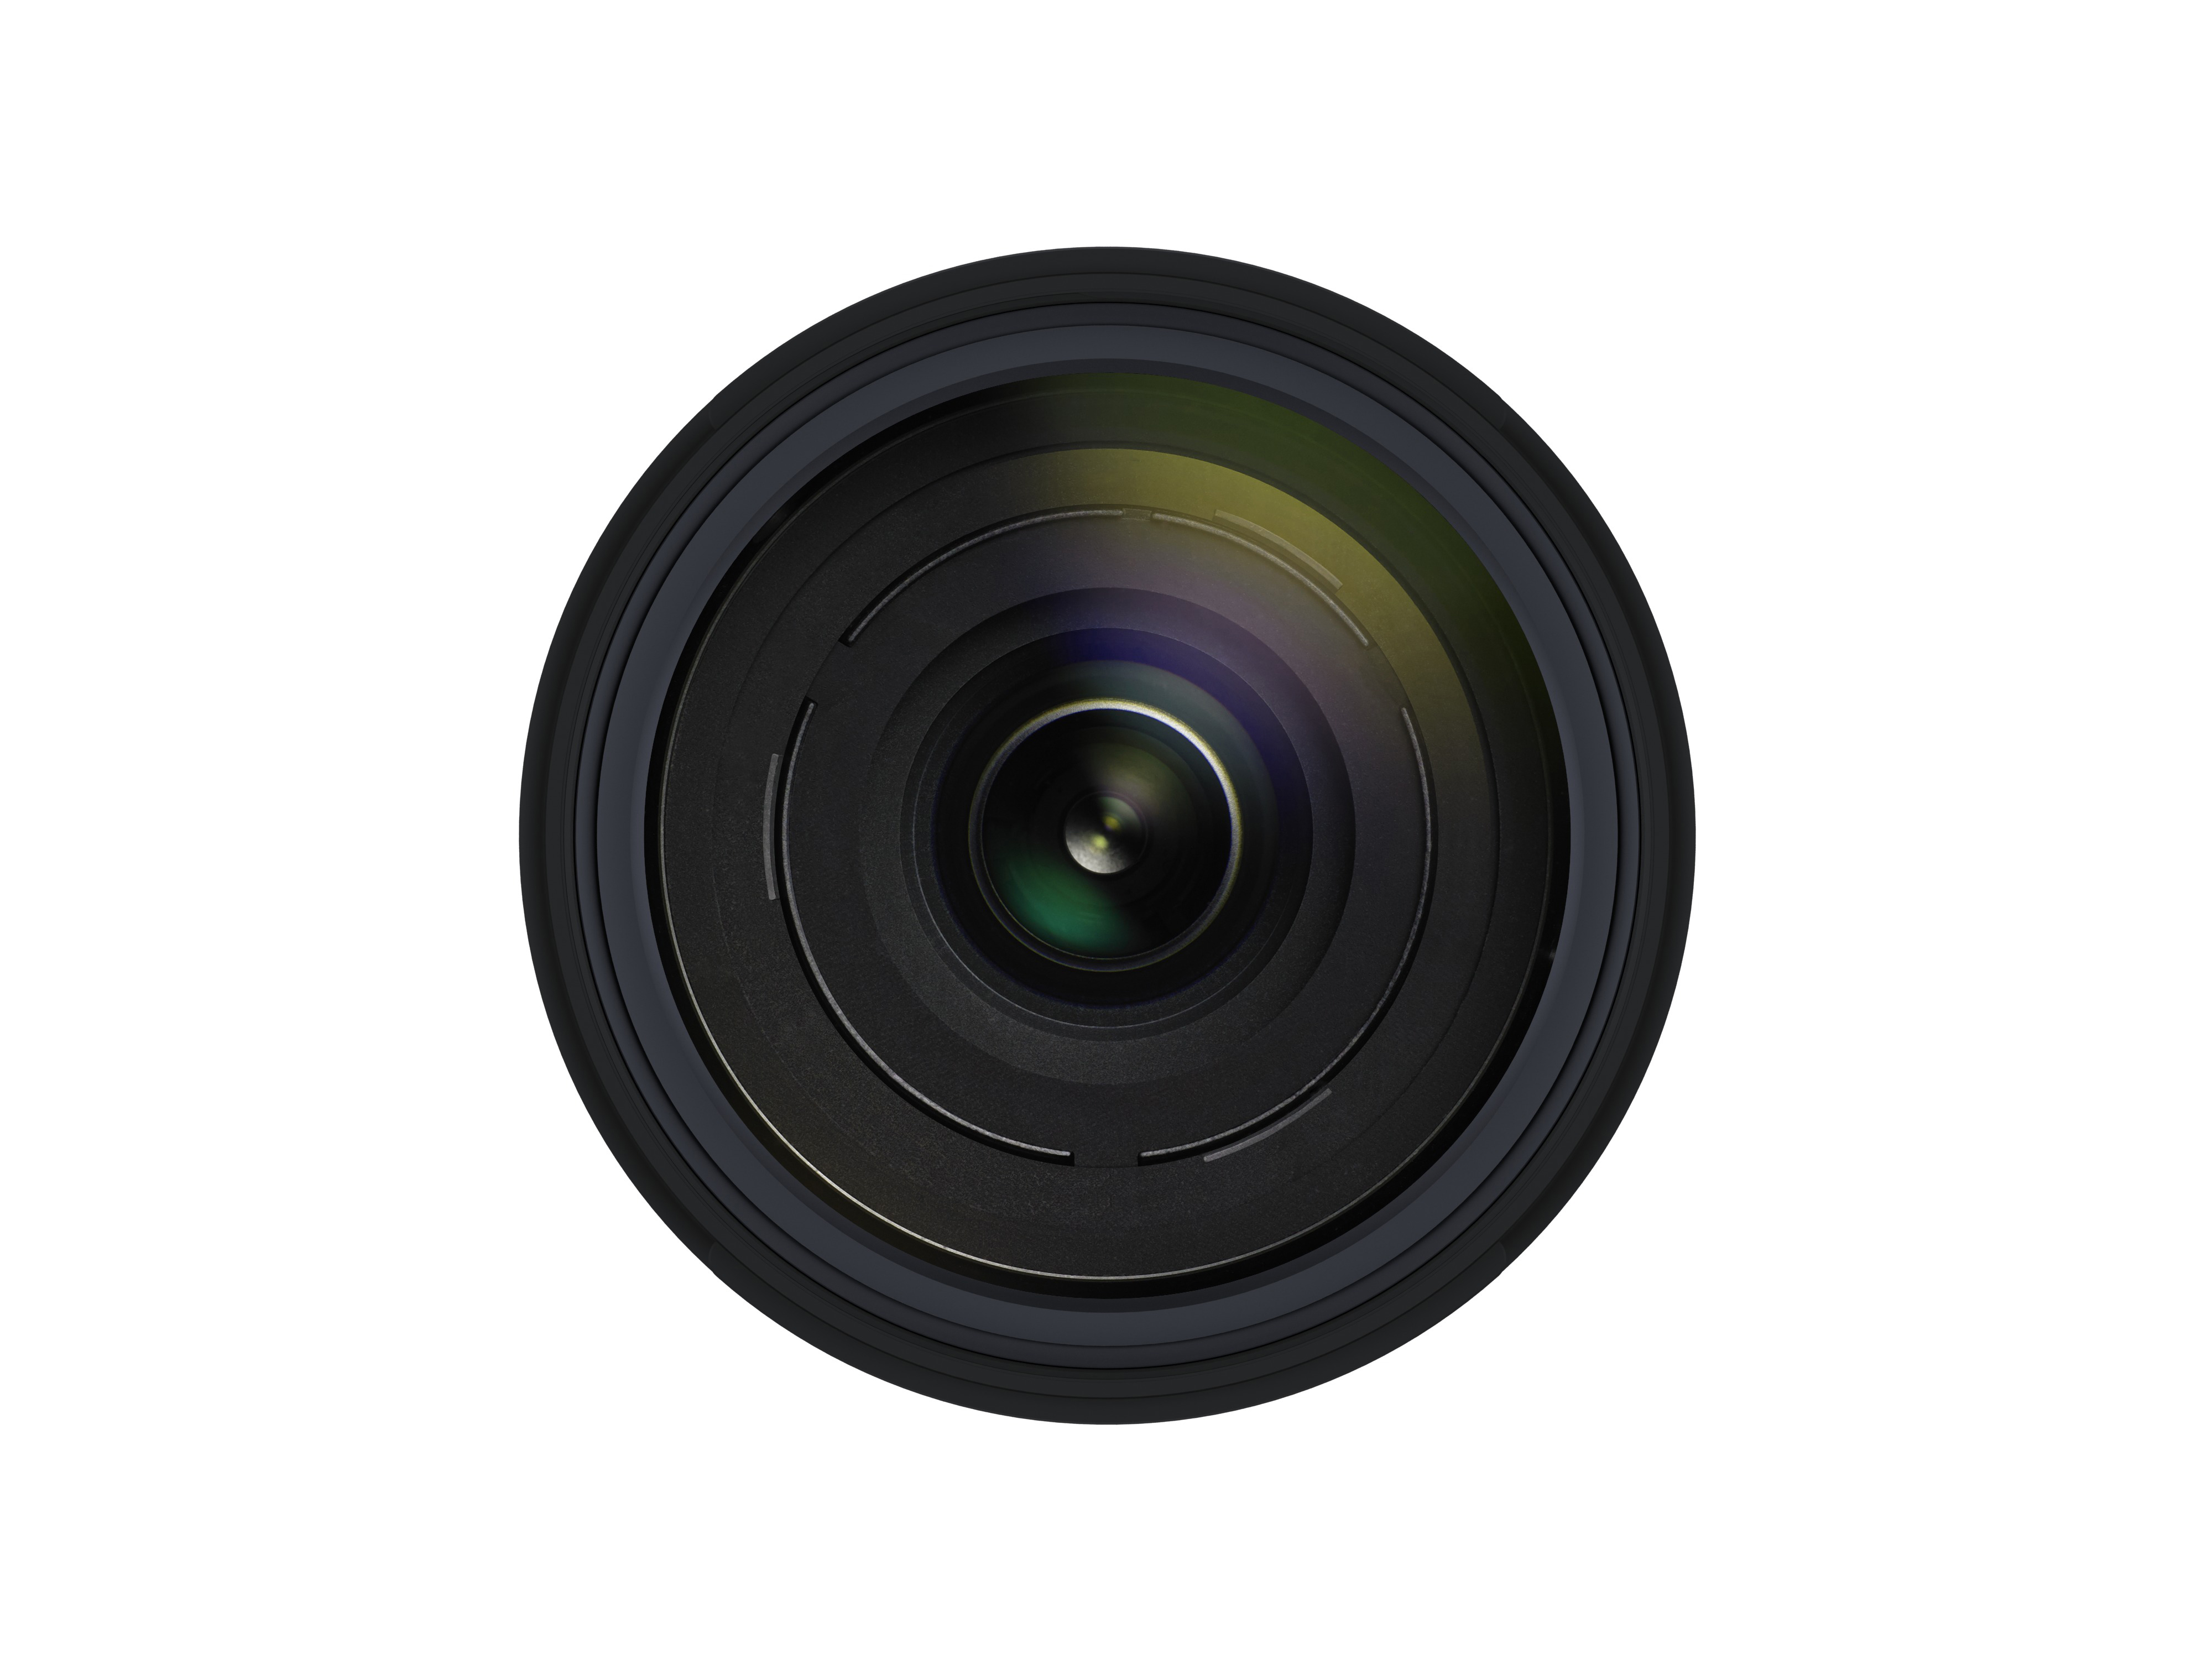 TAMRON DI HLD 18 mm Schwarz) HLD, (Objektiv Nikon f/3.5-6.3 F-Mount, - VC 400 für mm II, Di